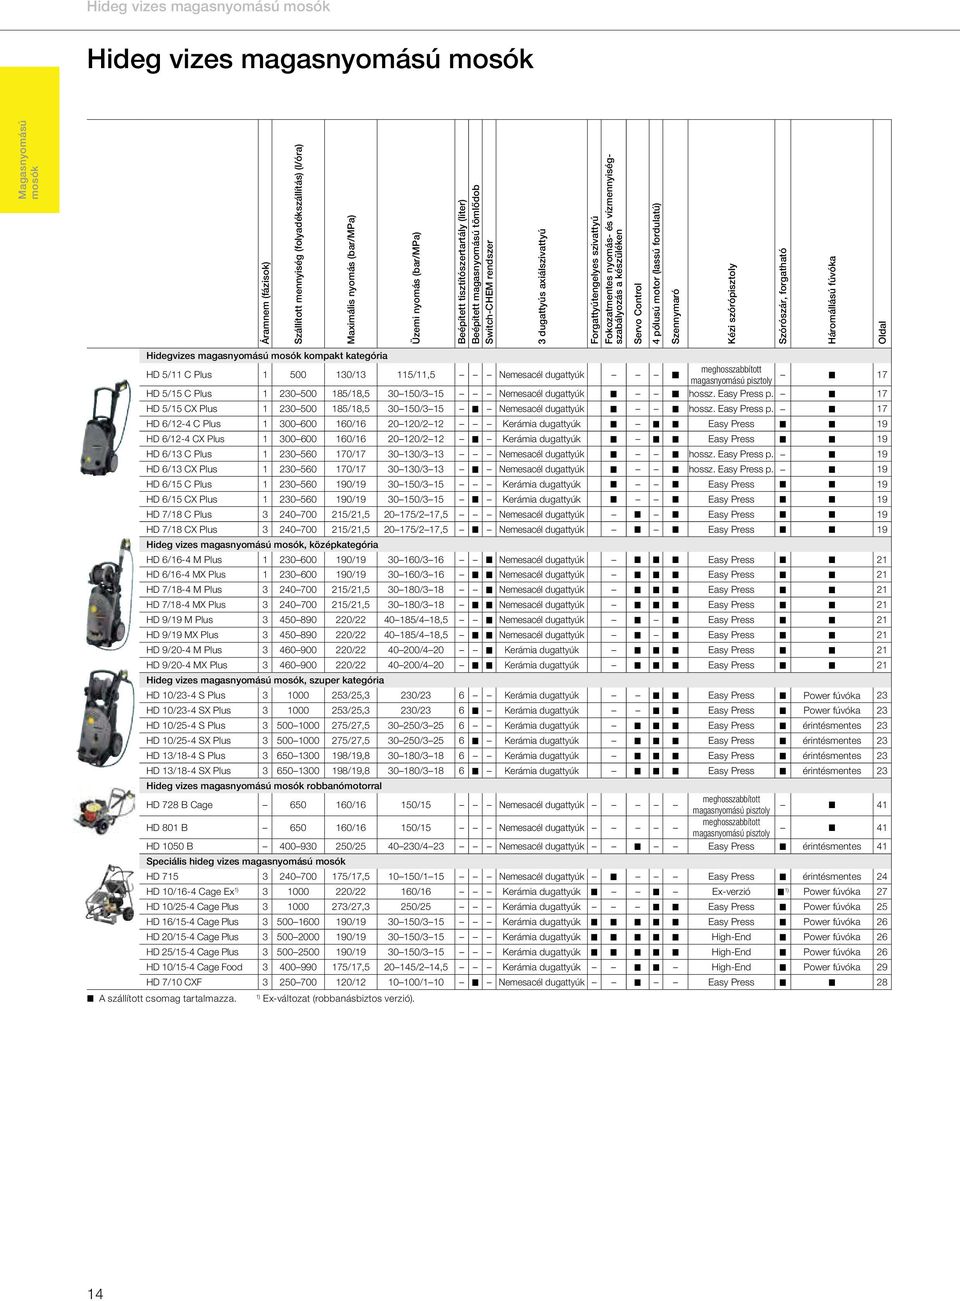 pisztoly HD 5/15 C Plus 1 230 500 185/18,5 30 150/3 15 Nemesacél dugattyúk hossz. Easy Press p.